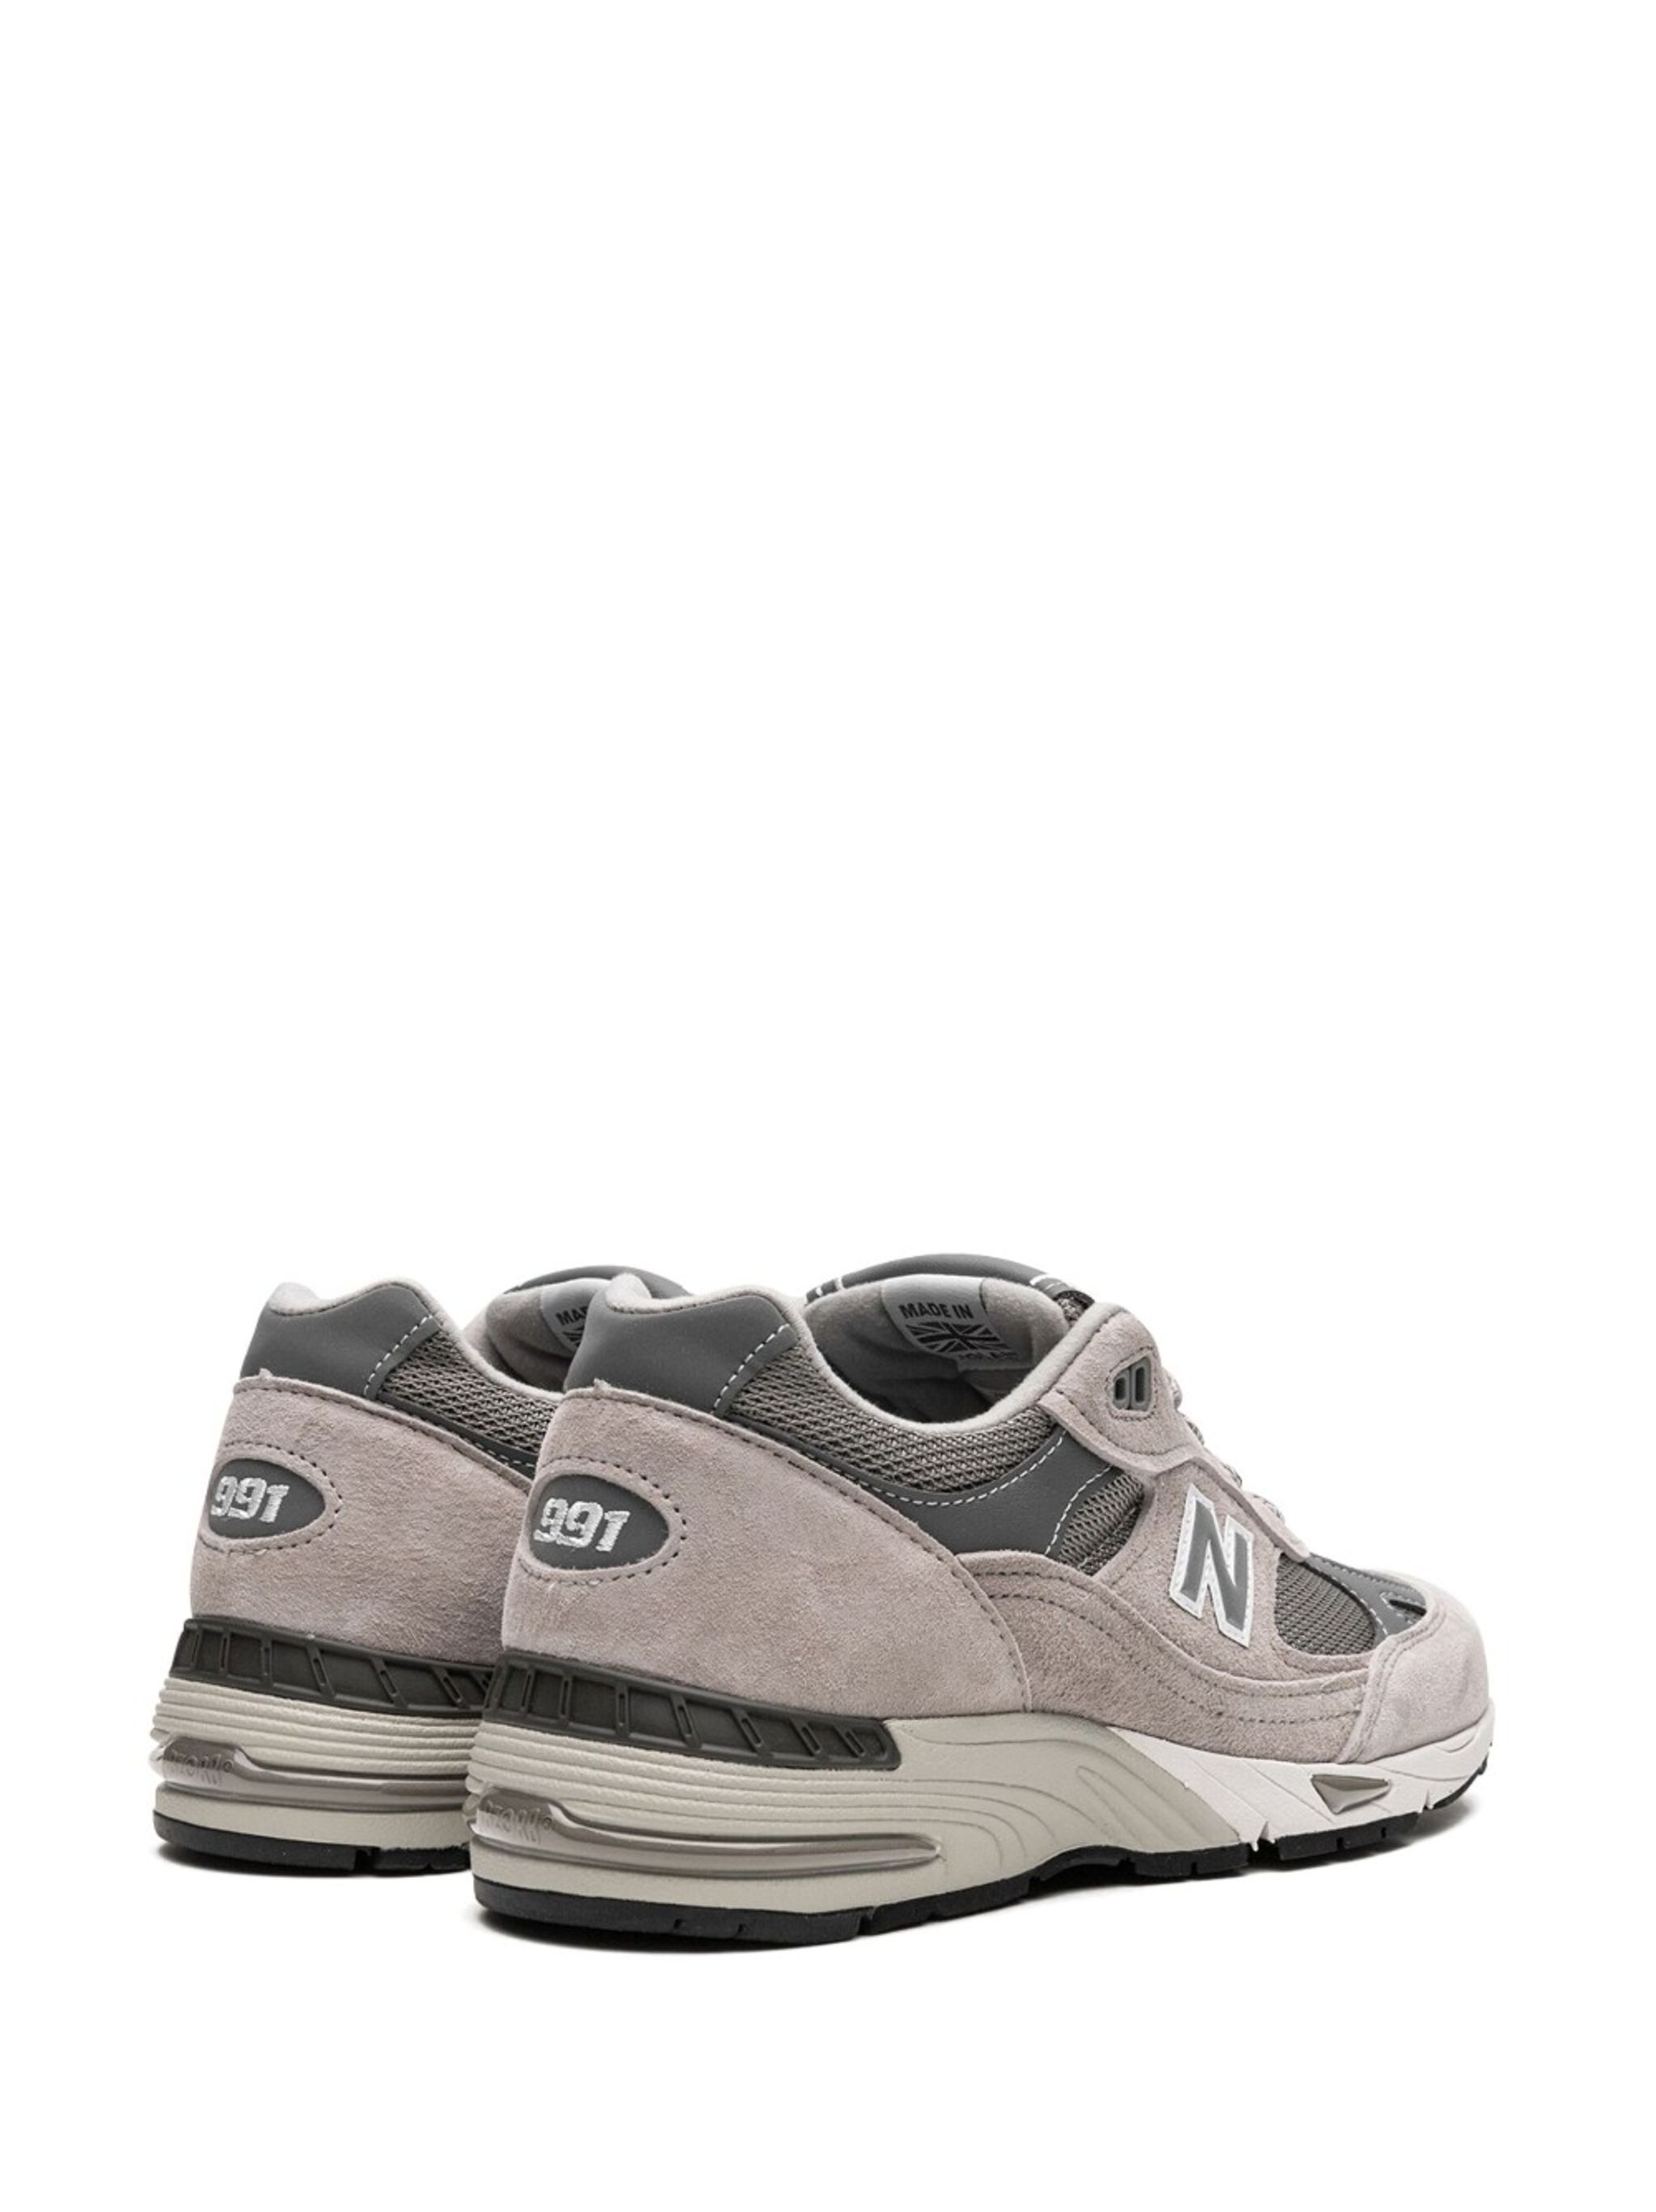 991Gl "Grey" sneakers - 3